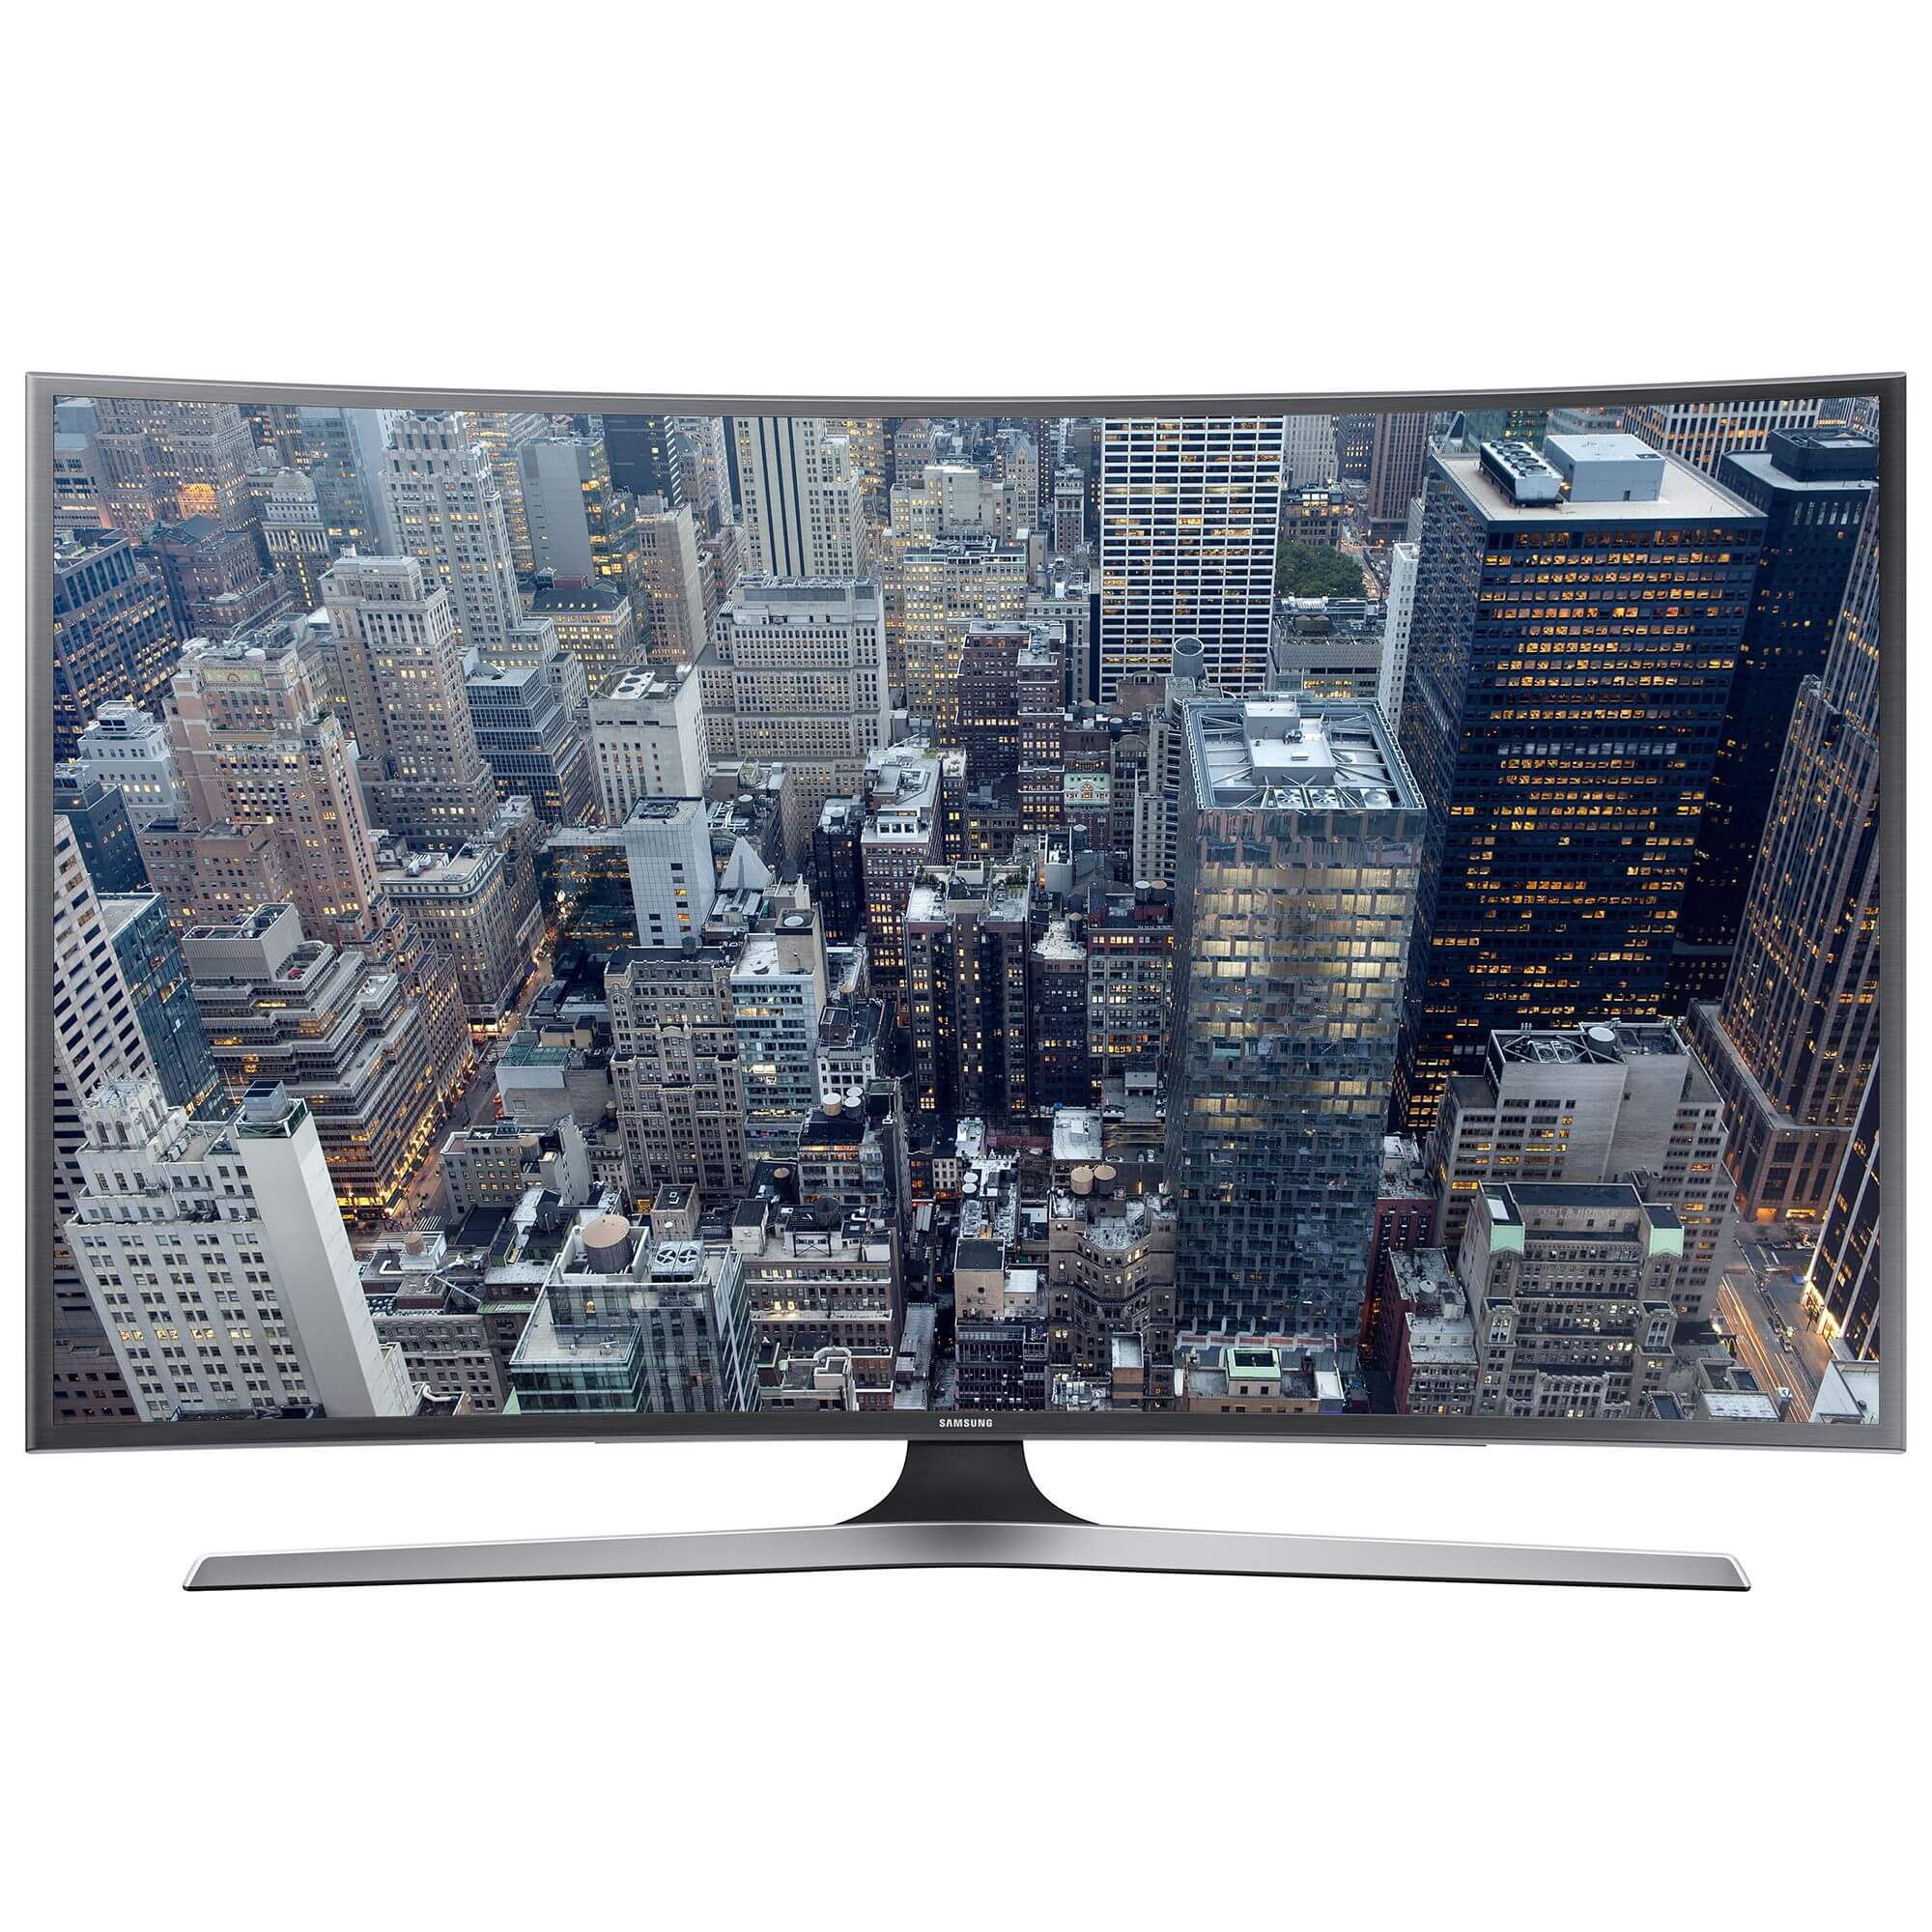  Televizor curbat, Smart LED, Samsung 40JU6500, 101 cm, Ultra HD 4K 